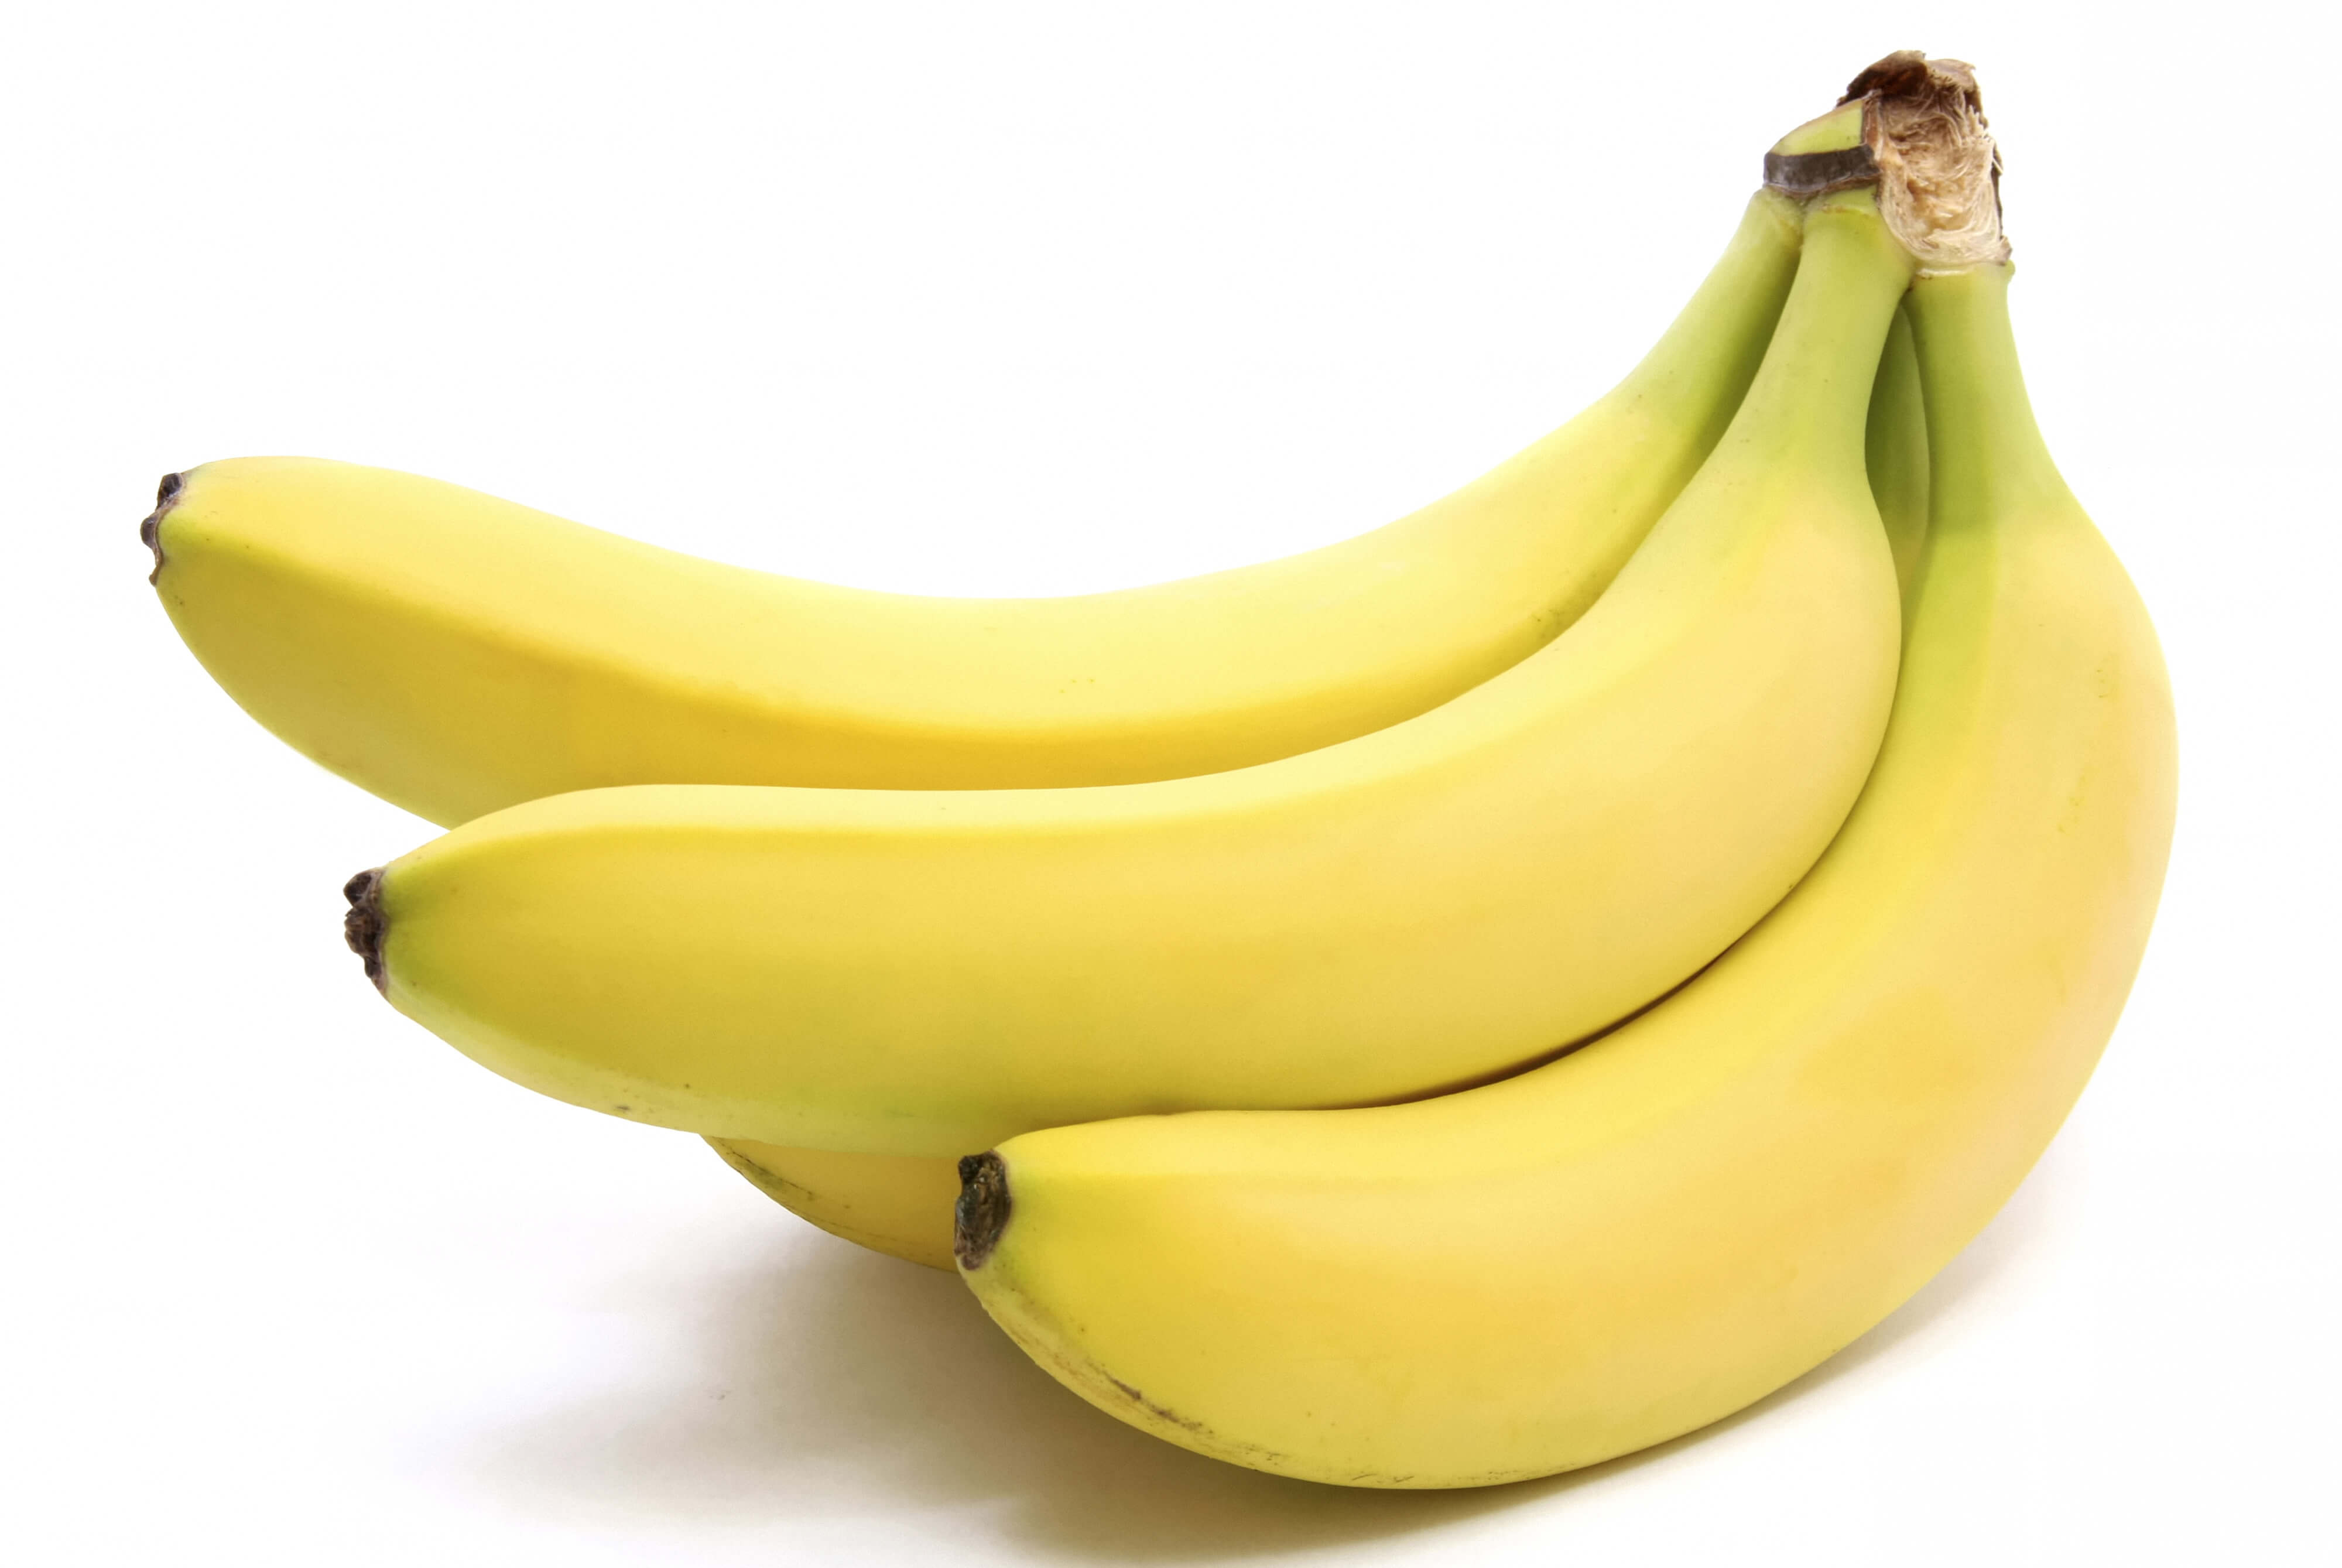 Bananas - What Are The Benefits Of Banana